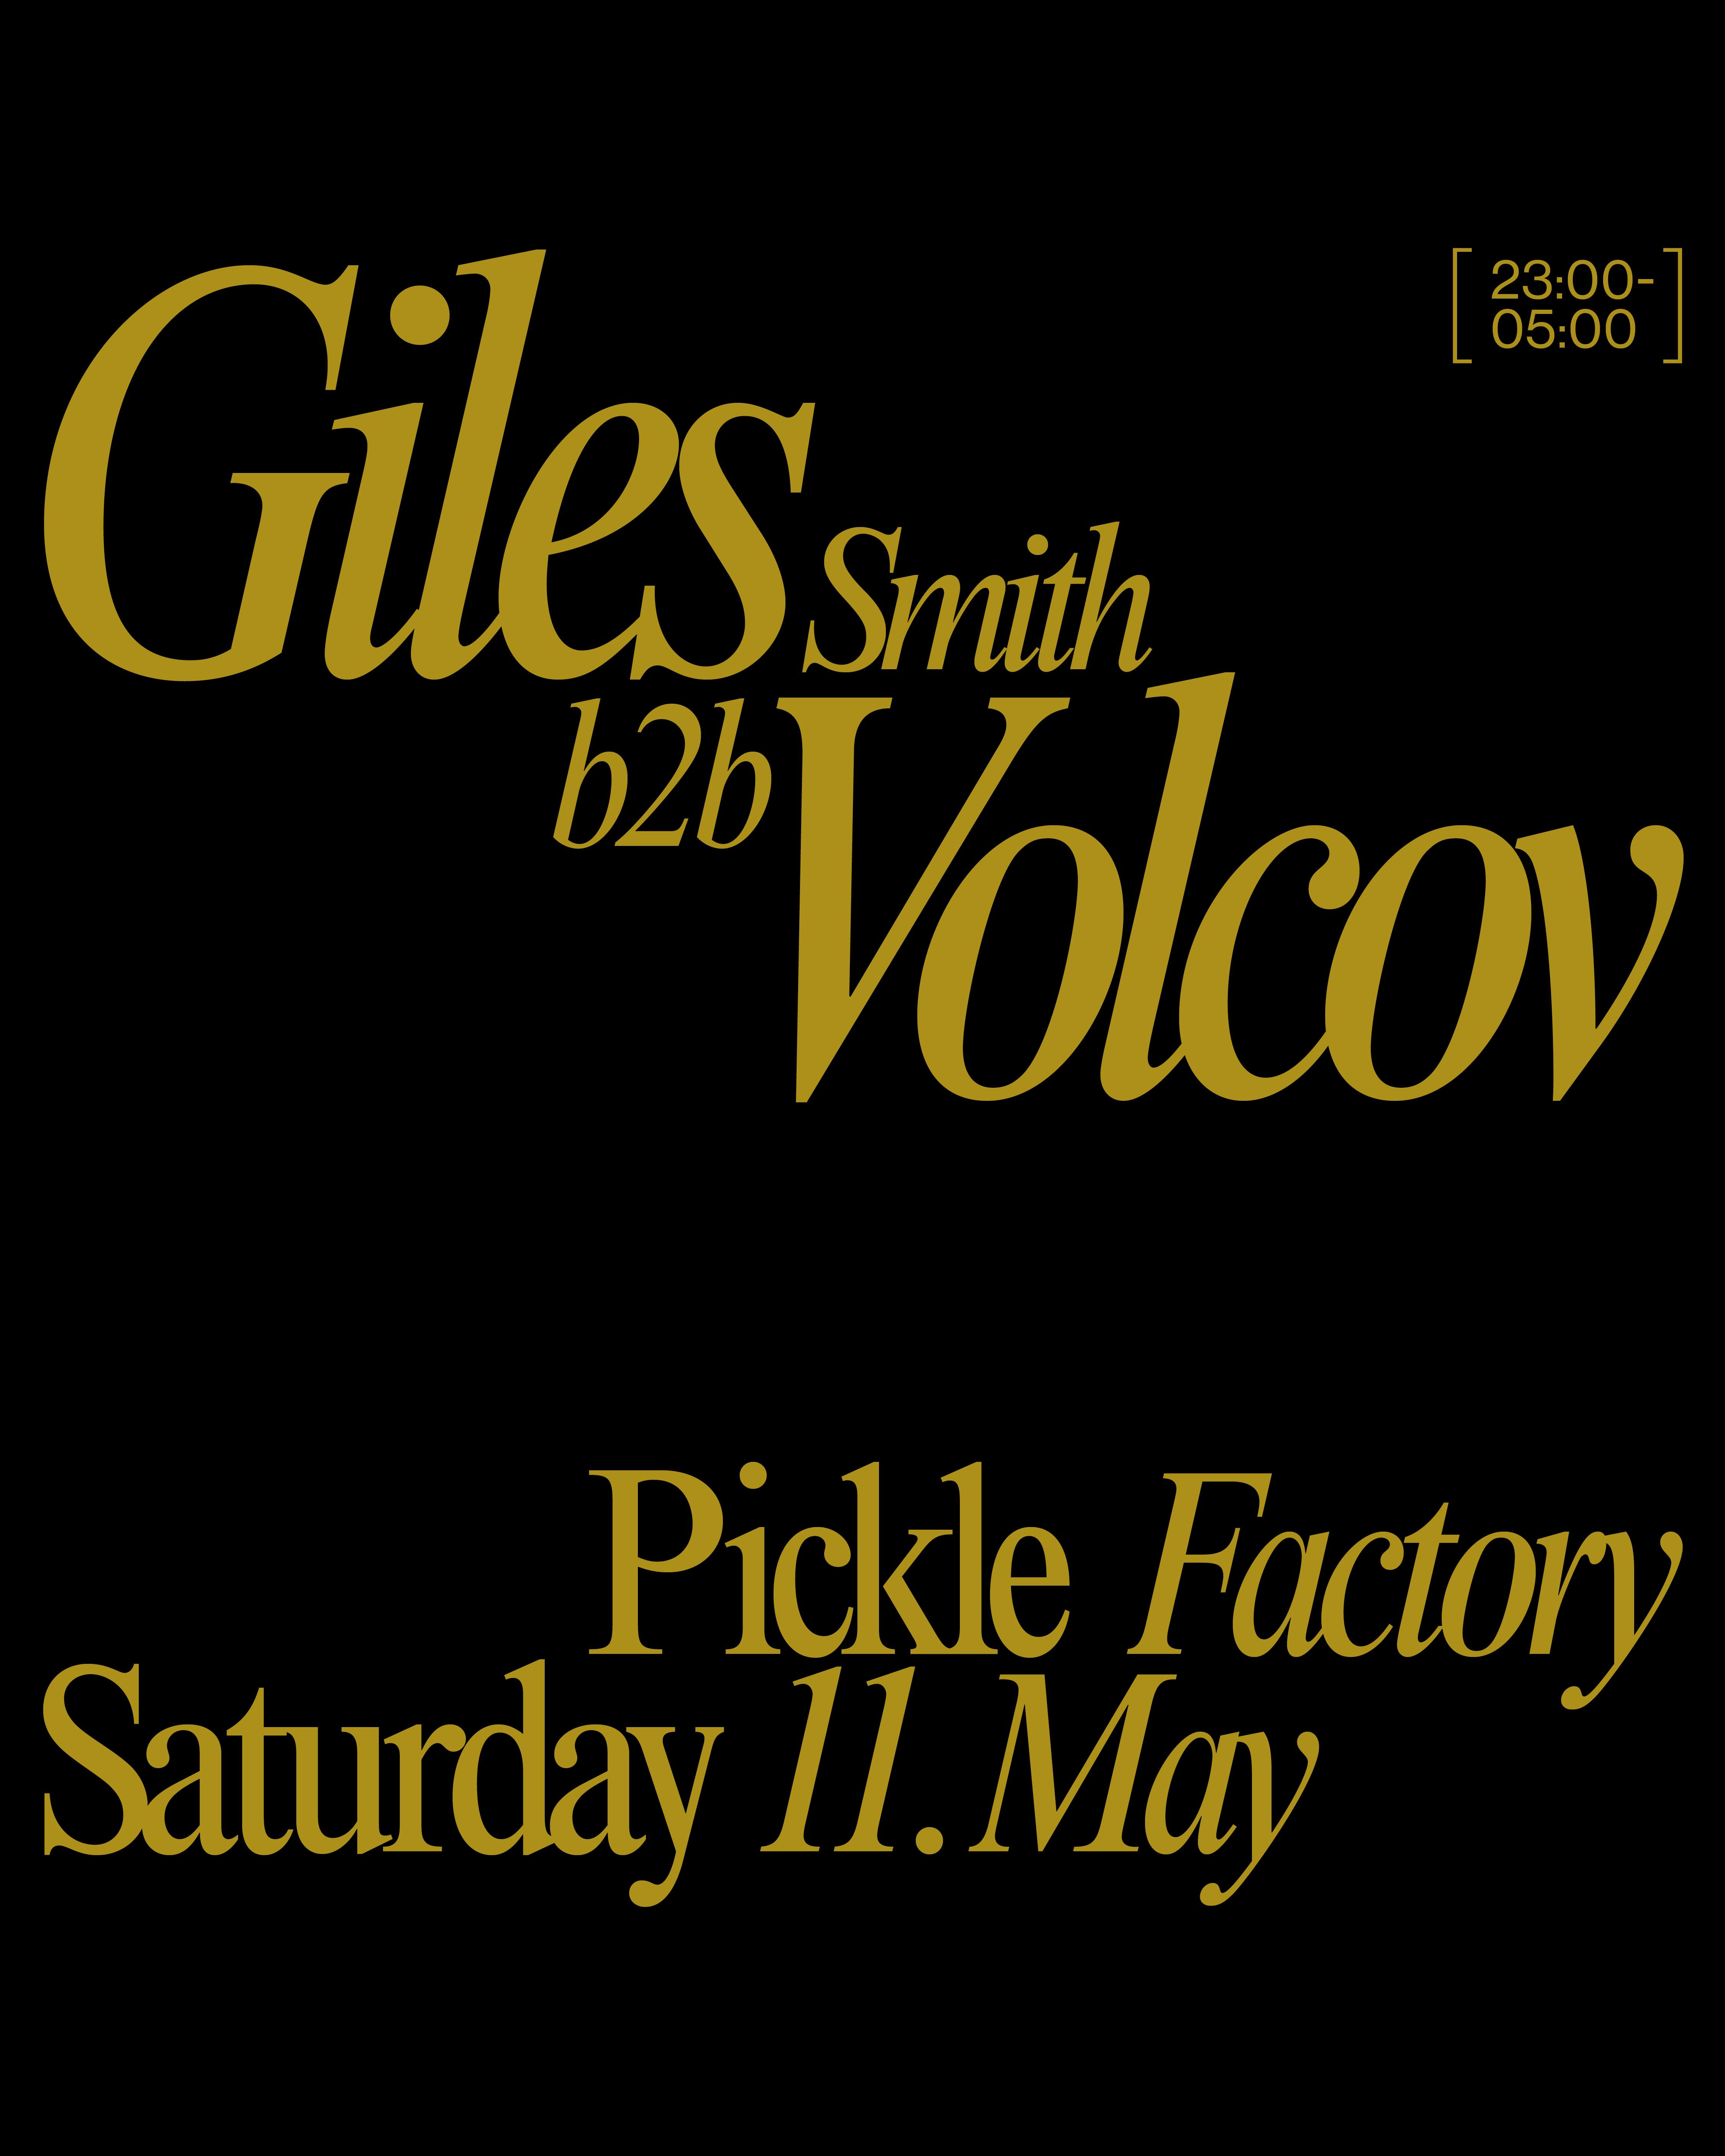 Giles Smith b2b Volcov - フライヤー表